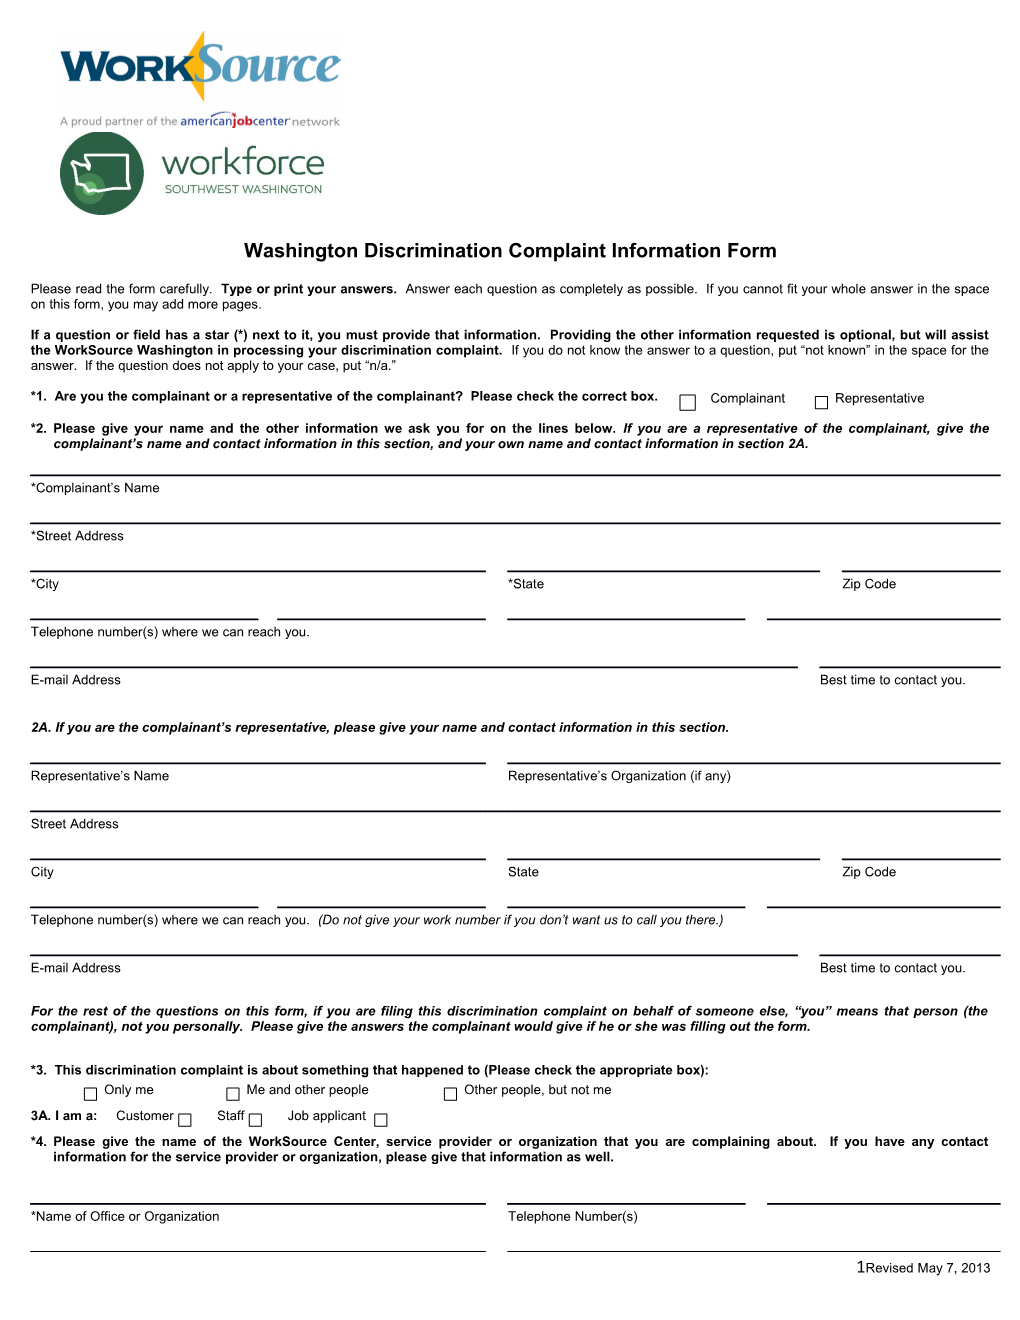 Washington Discrimination Complaint Information Form